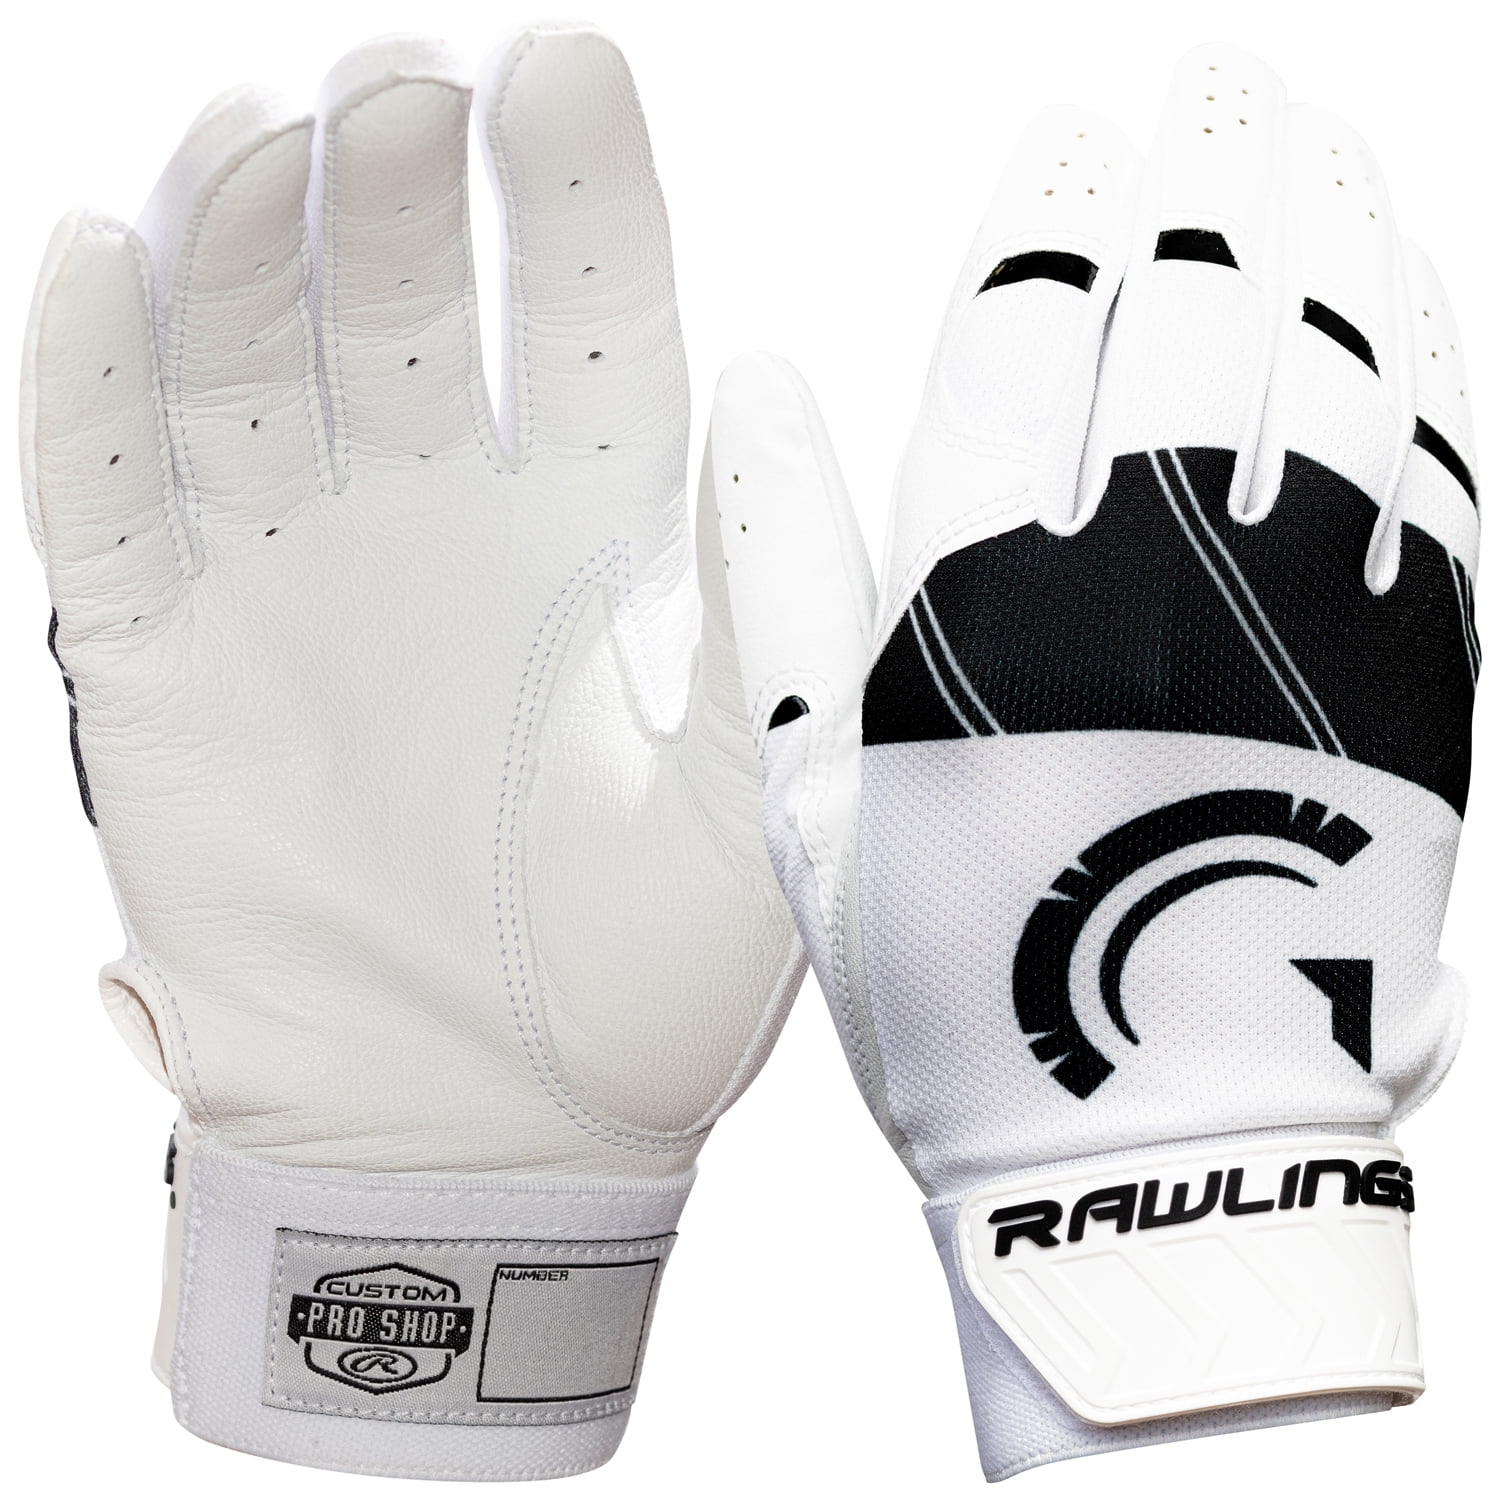 New Rawlings 5150 Baseball Batting Gloves Adult Large White/Black softball mens 